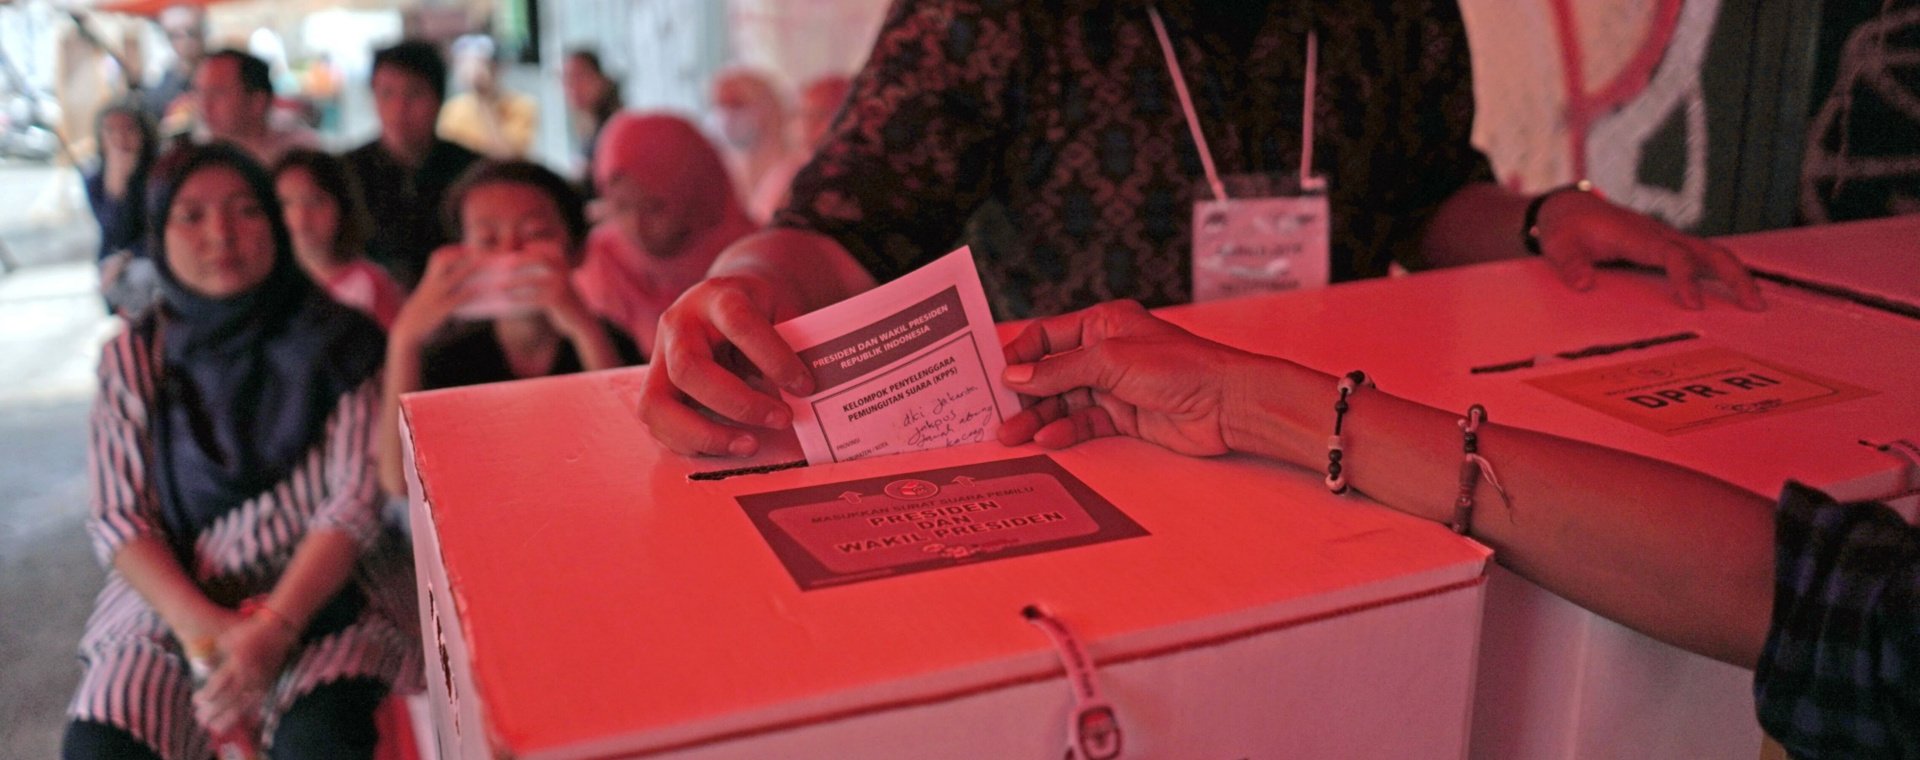 Pemilih memasukkan surat suara ke kotak suara di Tanah Abang, Jakarta saat pelaksanaan pemilu serentak 2019. - Bloomberg/Dimas Ardian